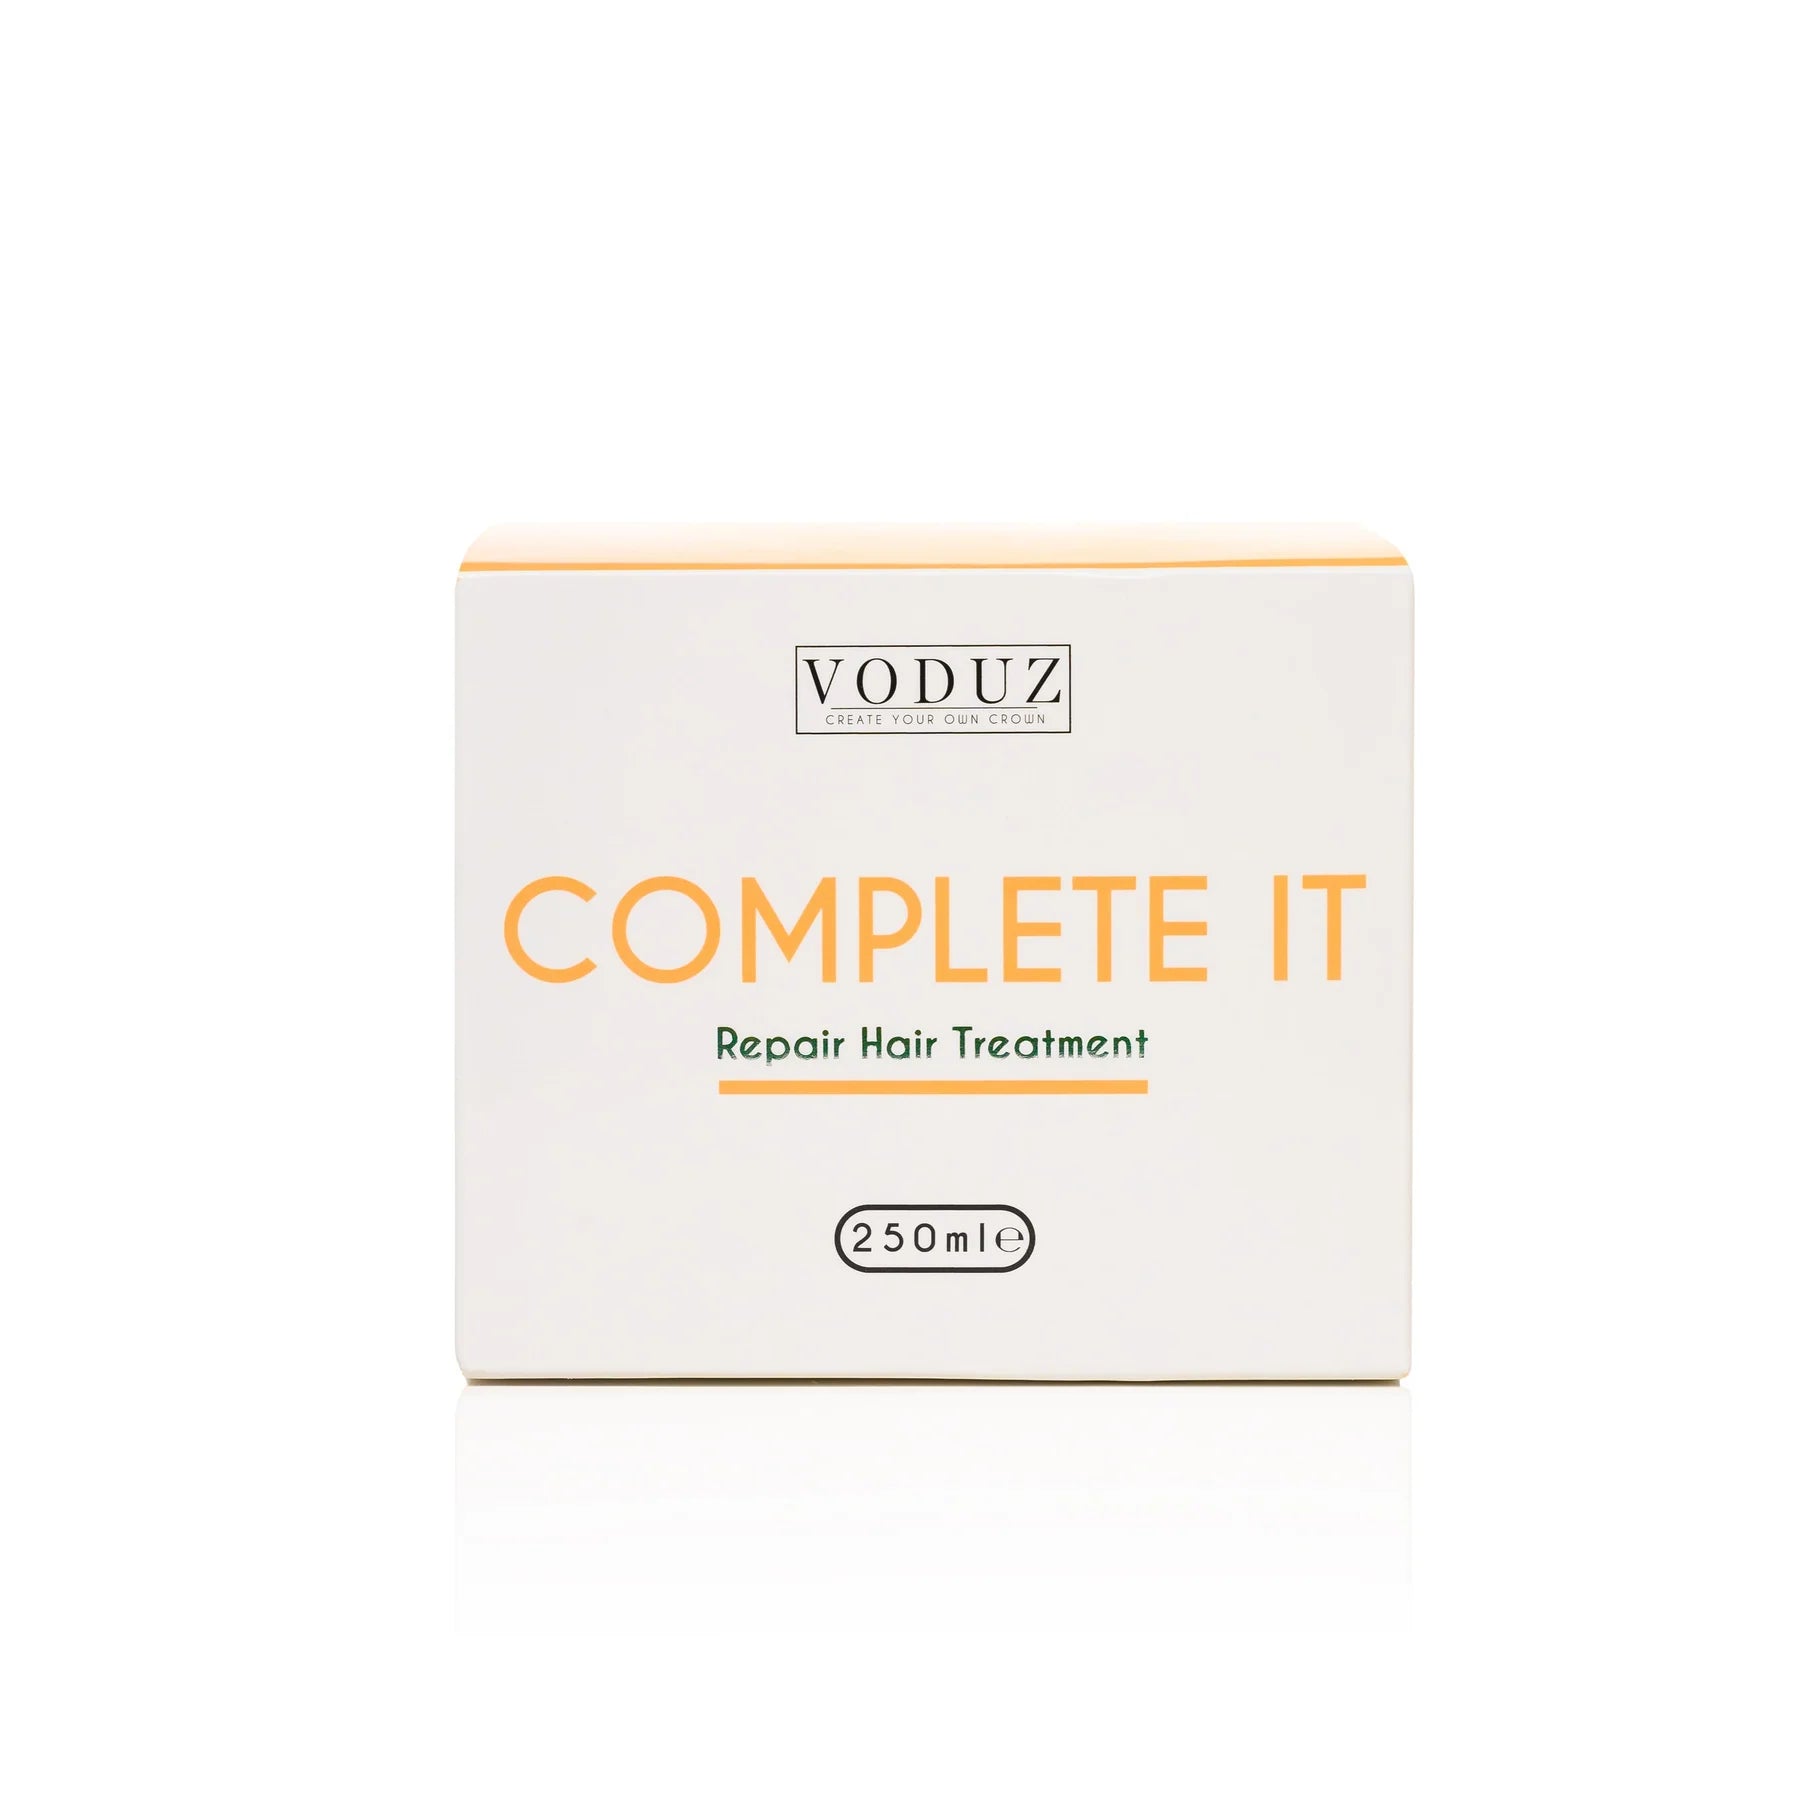 Voduz COMPLETE IT' REPAIR HAIR TREATMENT 250ML